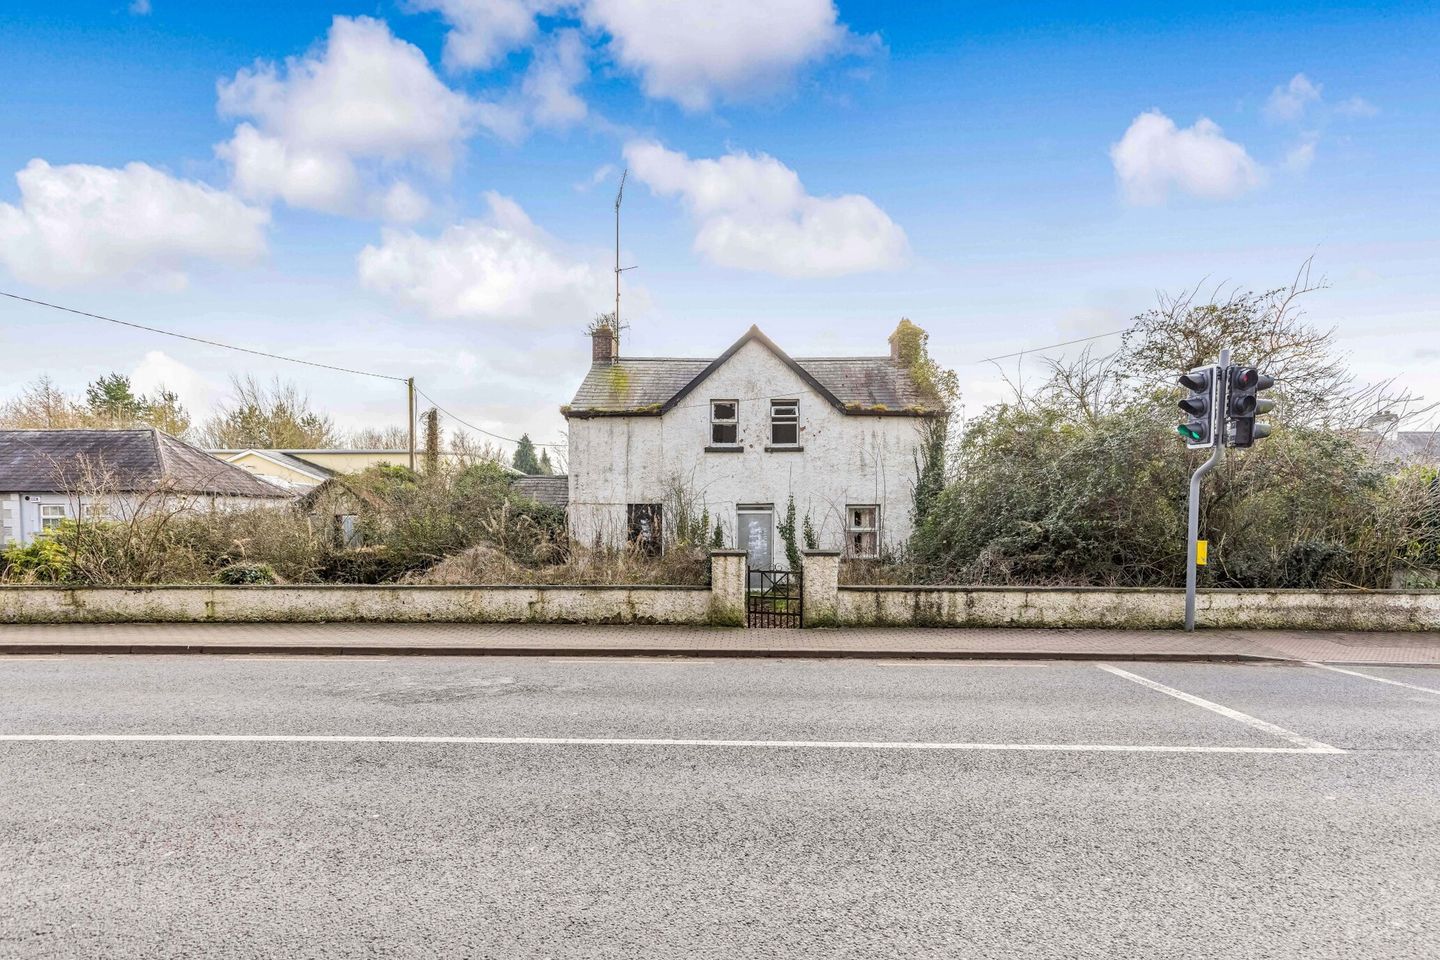 The School House, Mullingar Road, Ballivor, Co. Meath, C15KX65